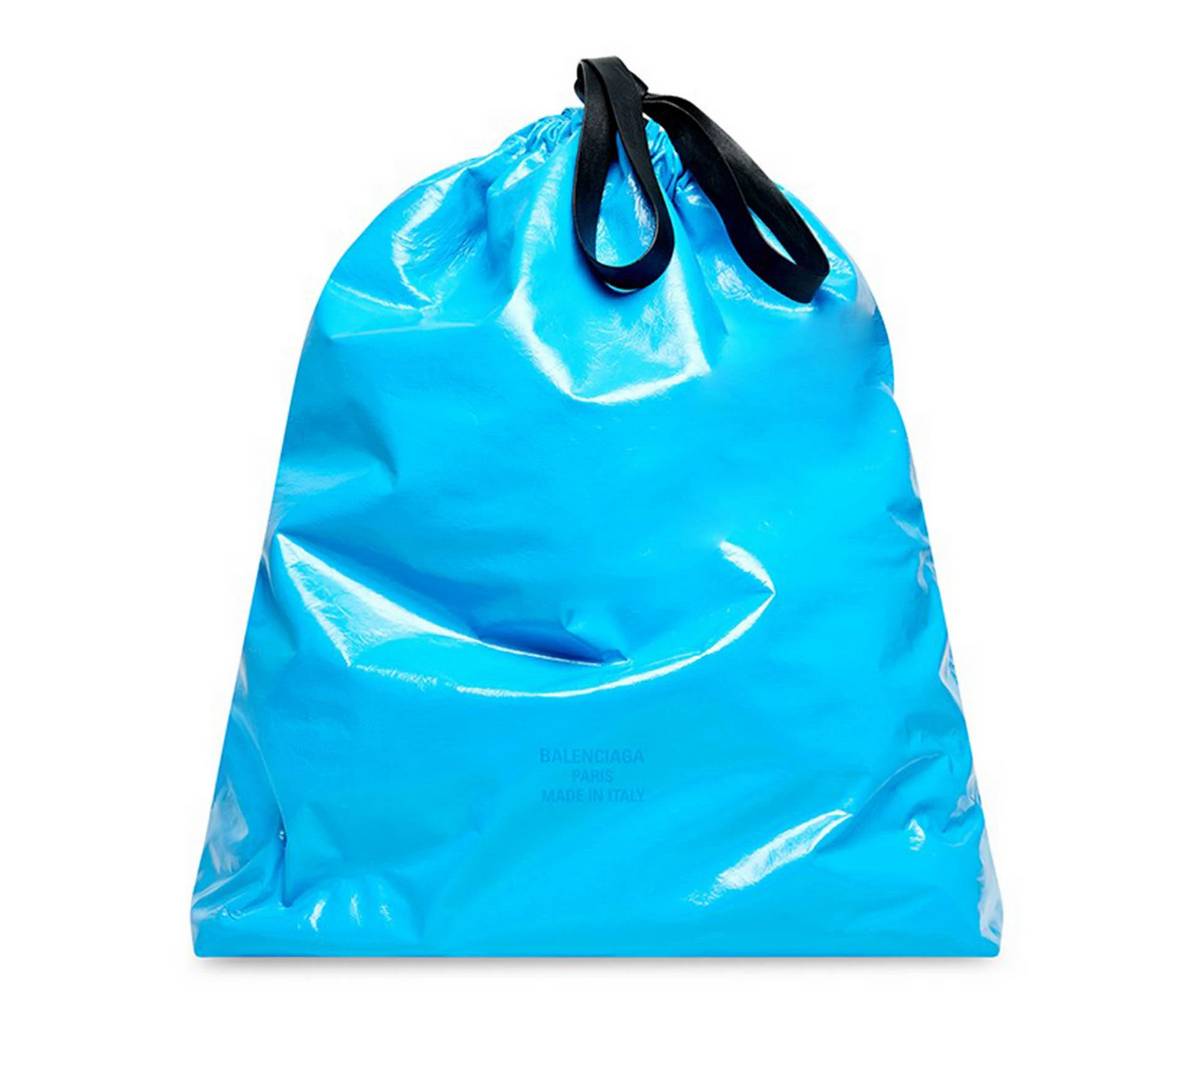 Balenciaga has created a bag that resembles a packet of Lay's